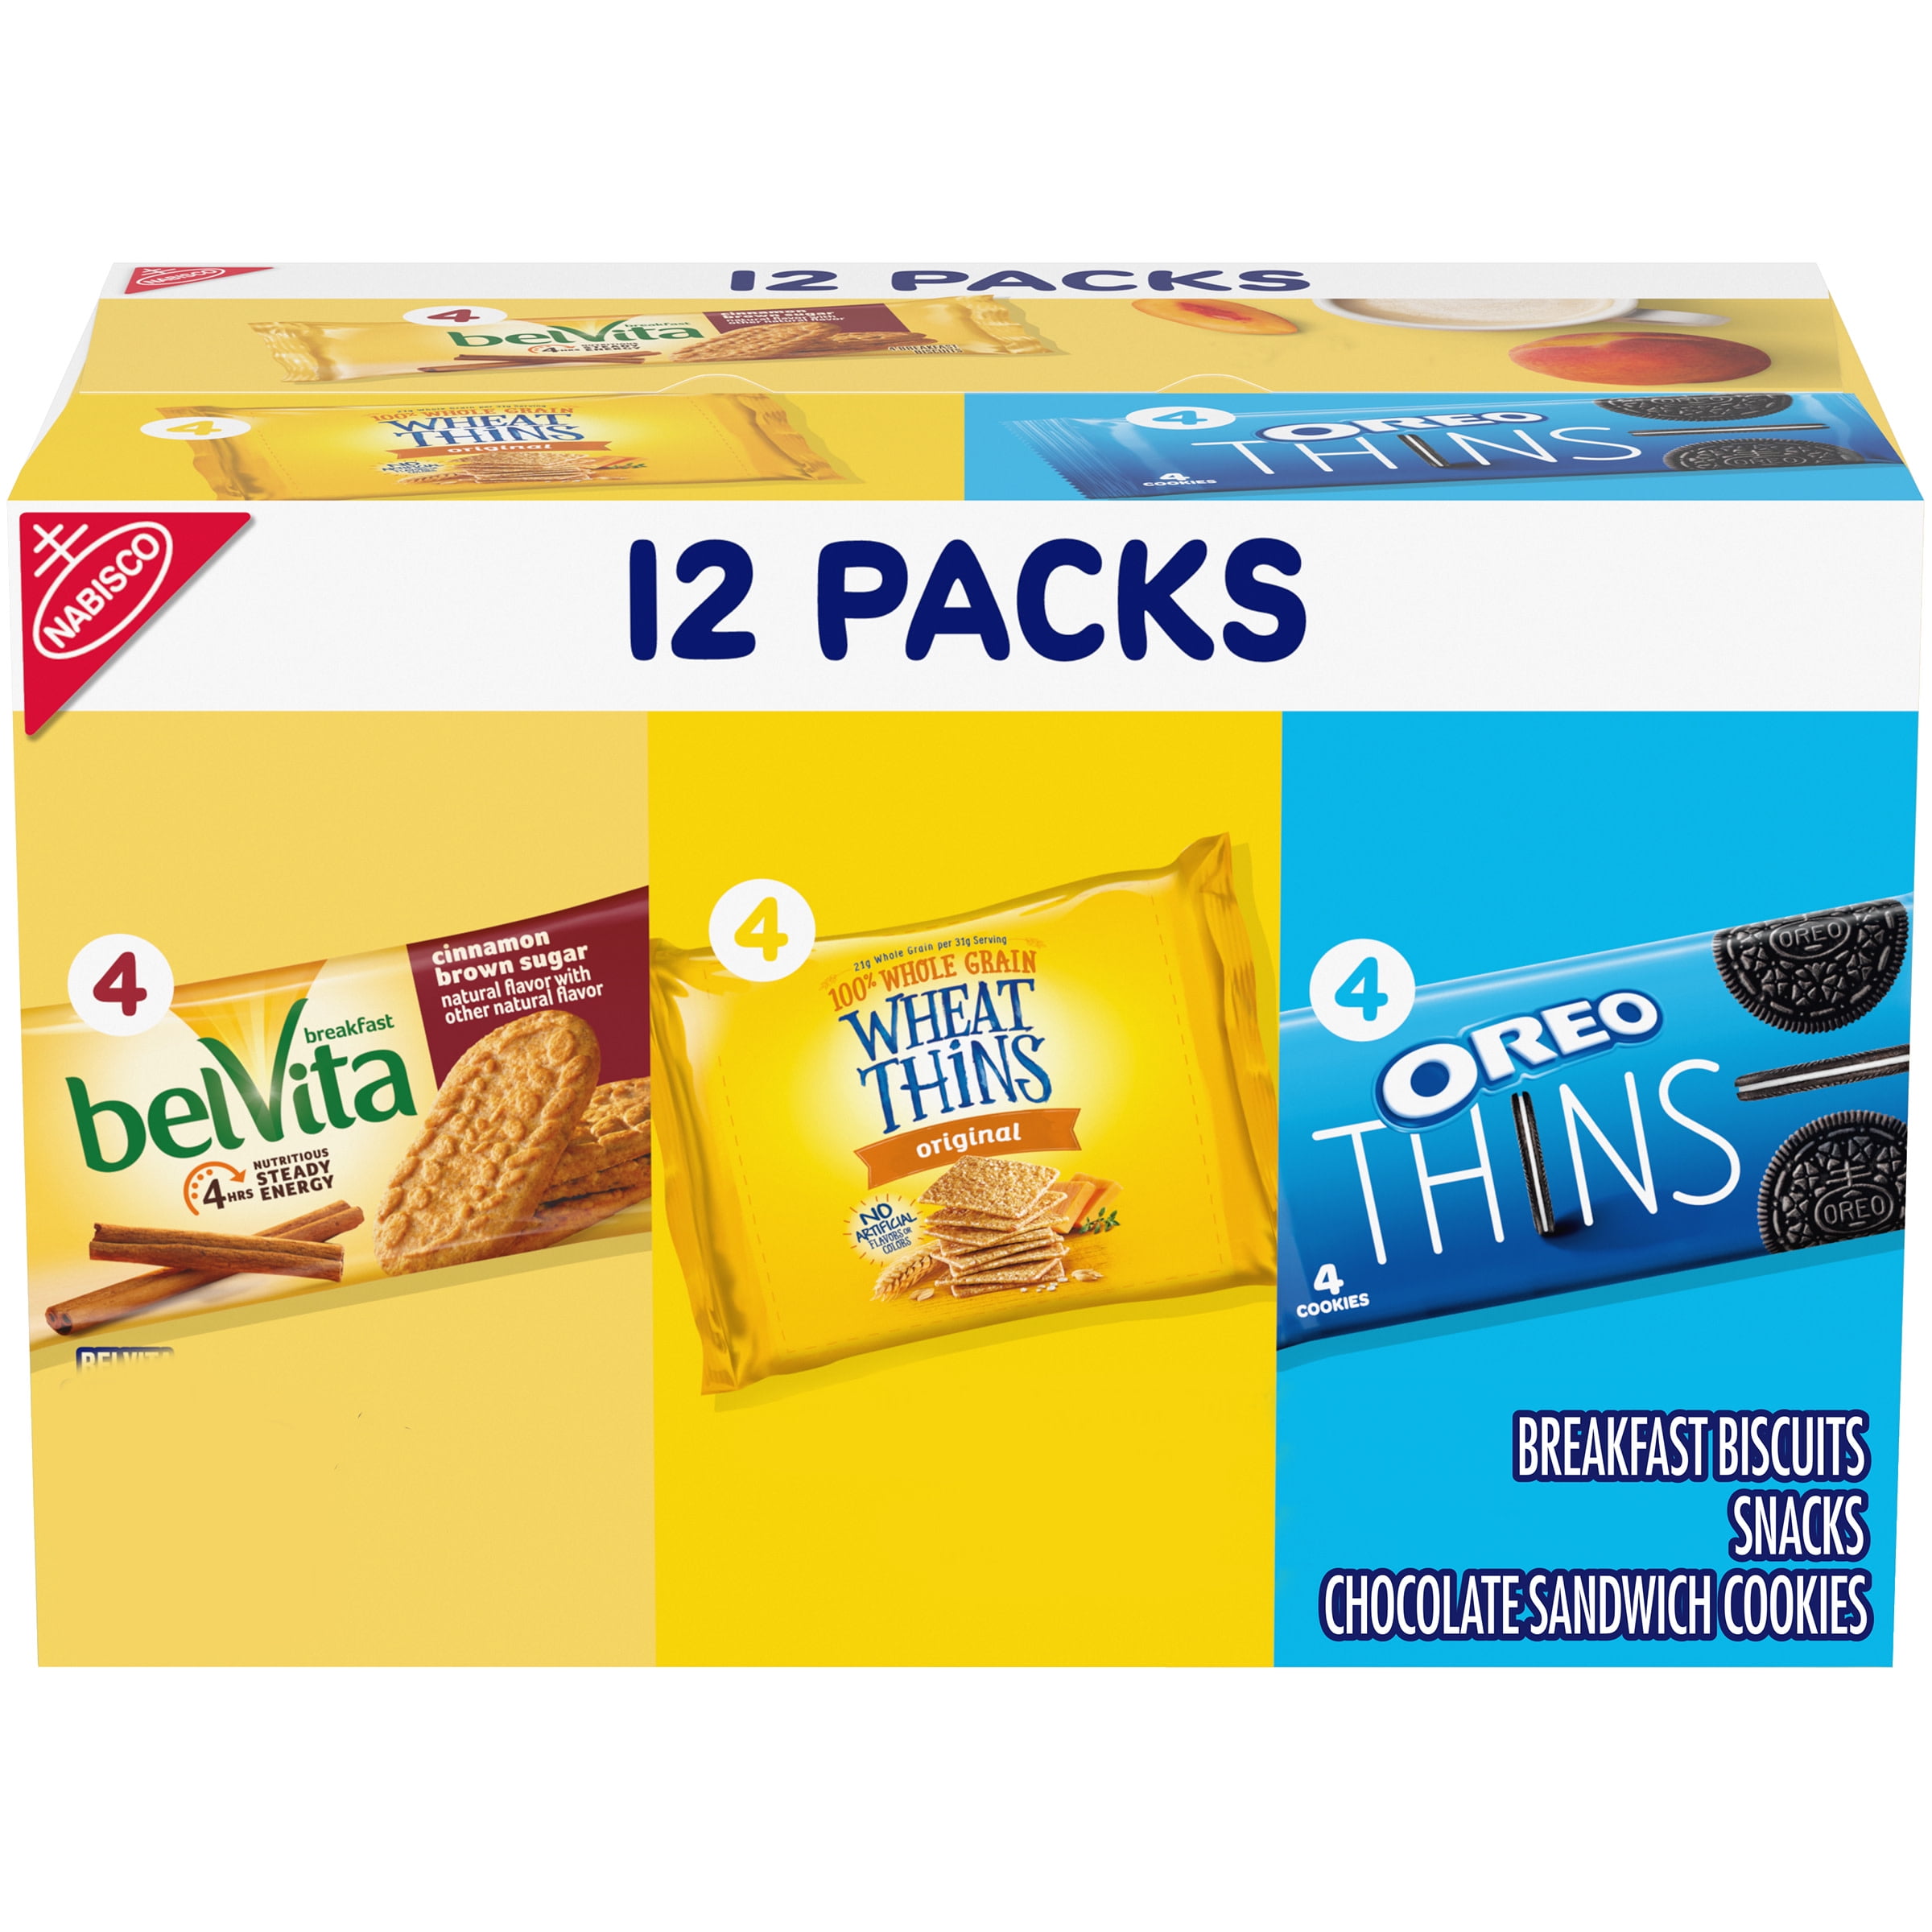 Nabisco OREO Thins Cookies, Wheat Thins Crackers & belVita Breakfast Biscuits Variety Pack, 12 Snack Packs